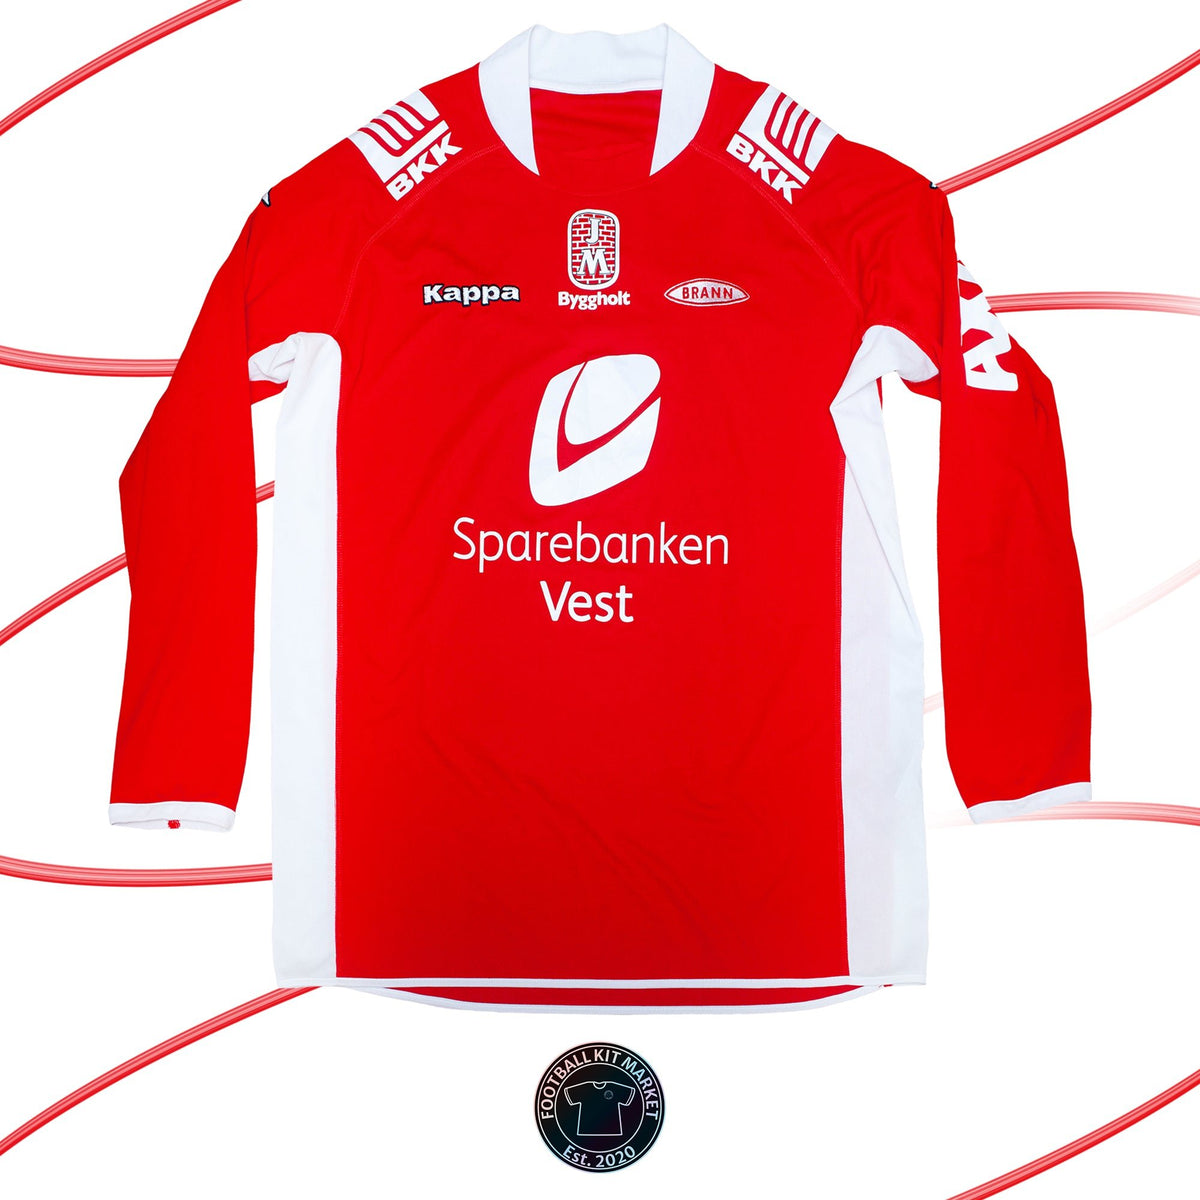 Genuine BRANN Home Shirt (2009) - KAPPA (XXL) - Product Image from Football Kit Market